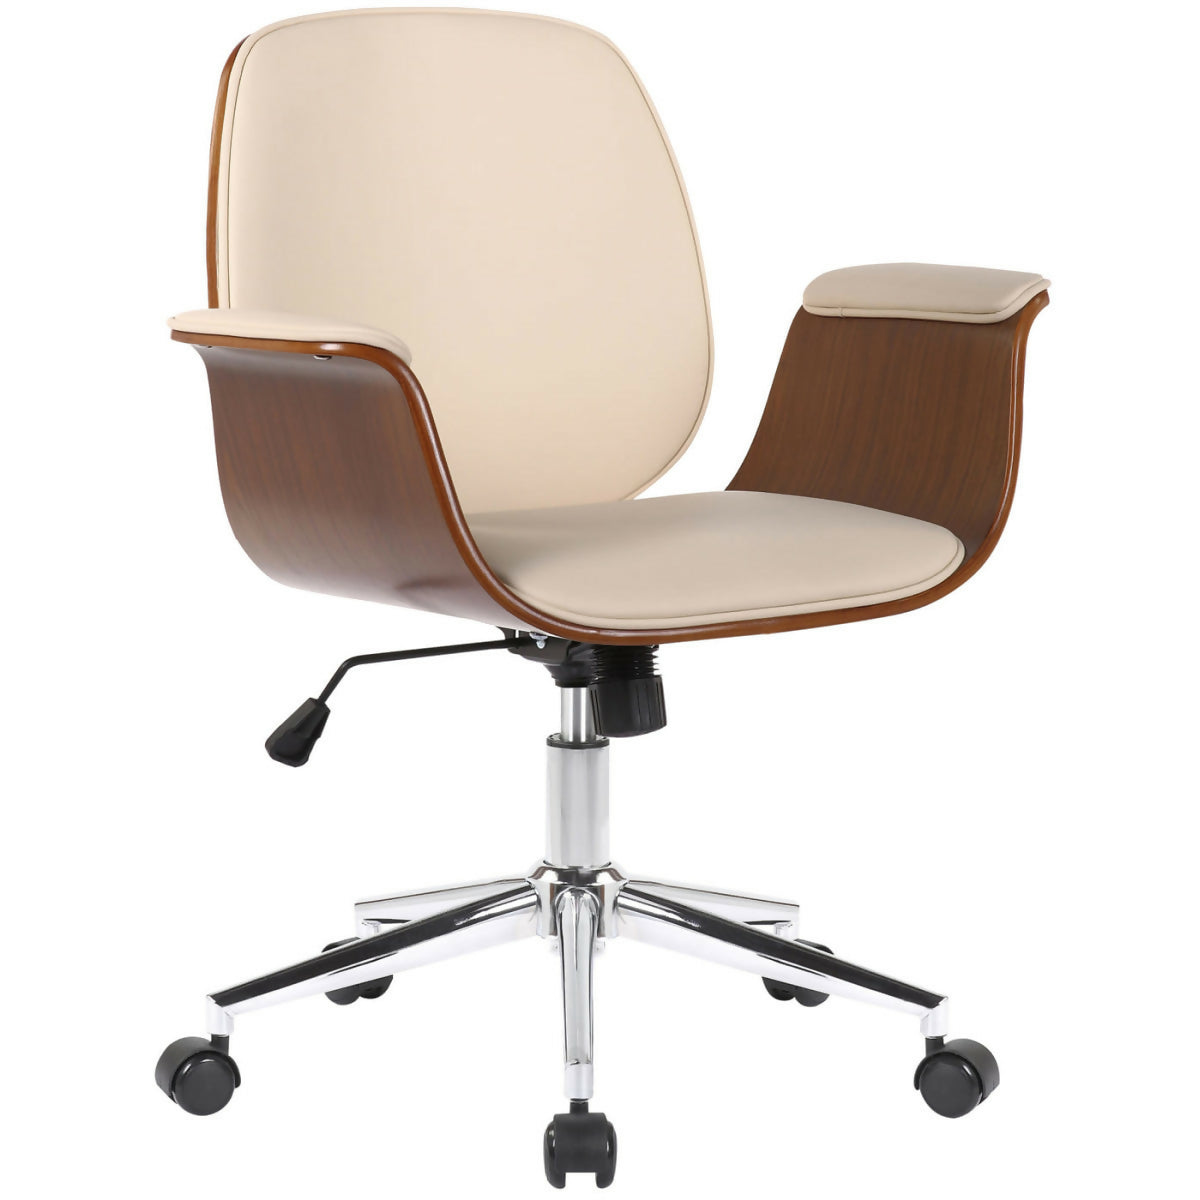 Kemberg office chair - Walnut - Cream